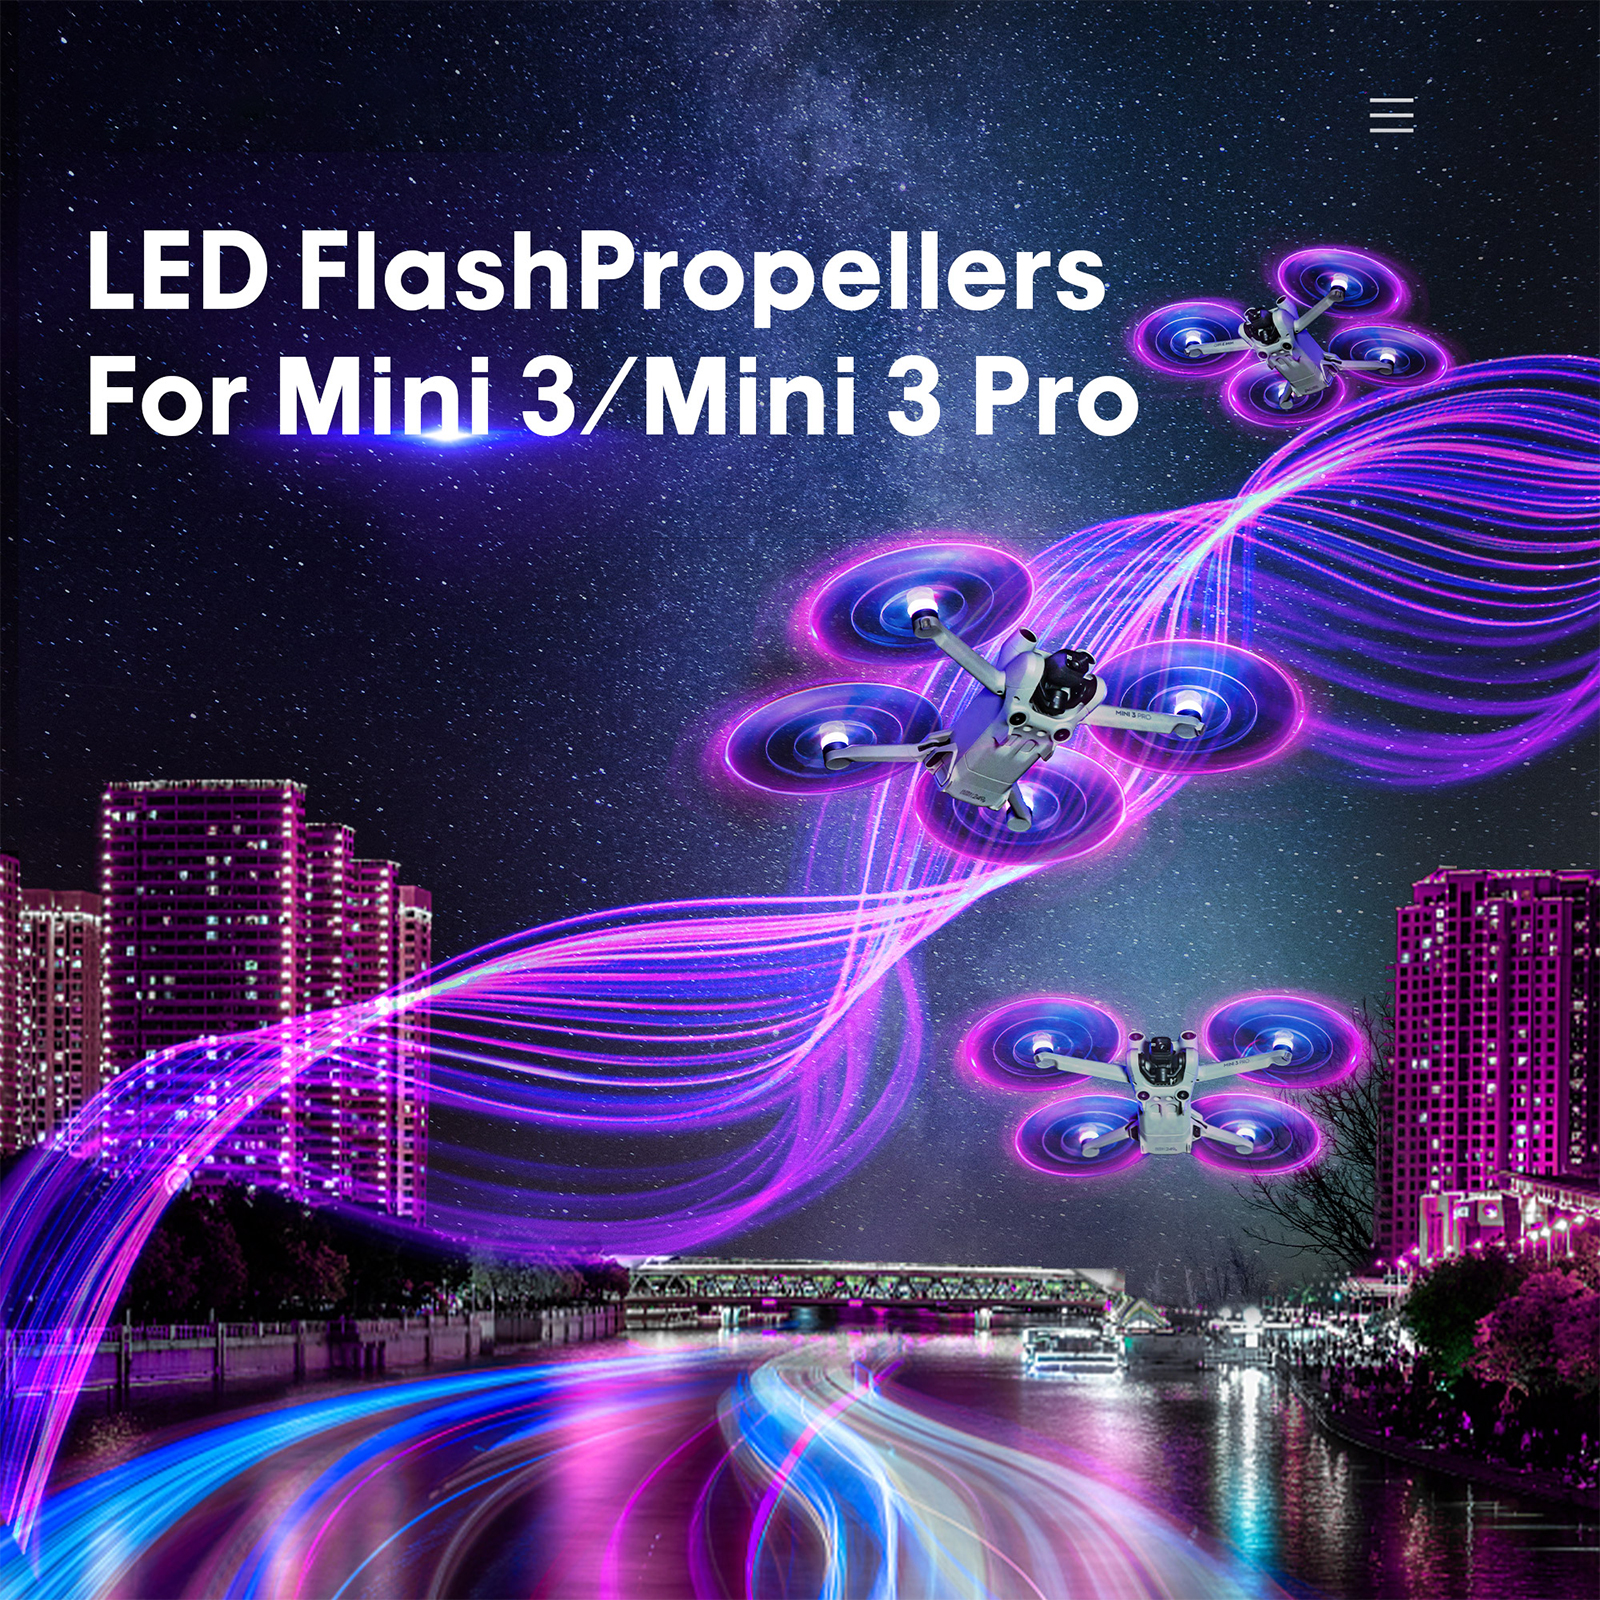 LED フラッシュ ライト プロペラ Dji Mini 3 / Mini 3 Pro と互換性あり 光るリング イルミネーション パドル ブレード